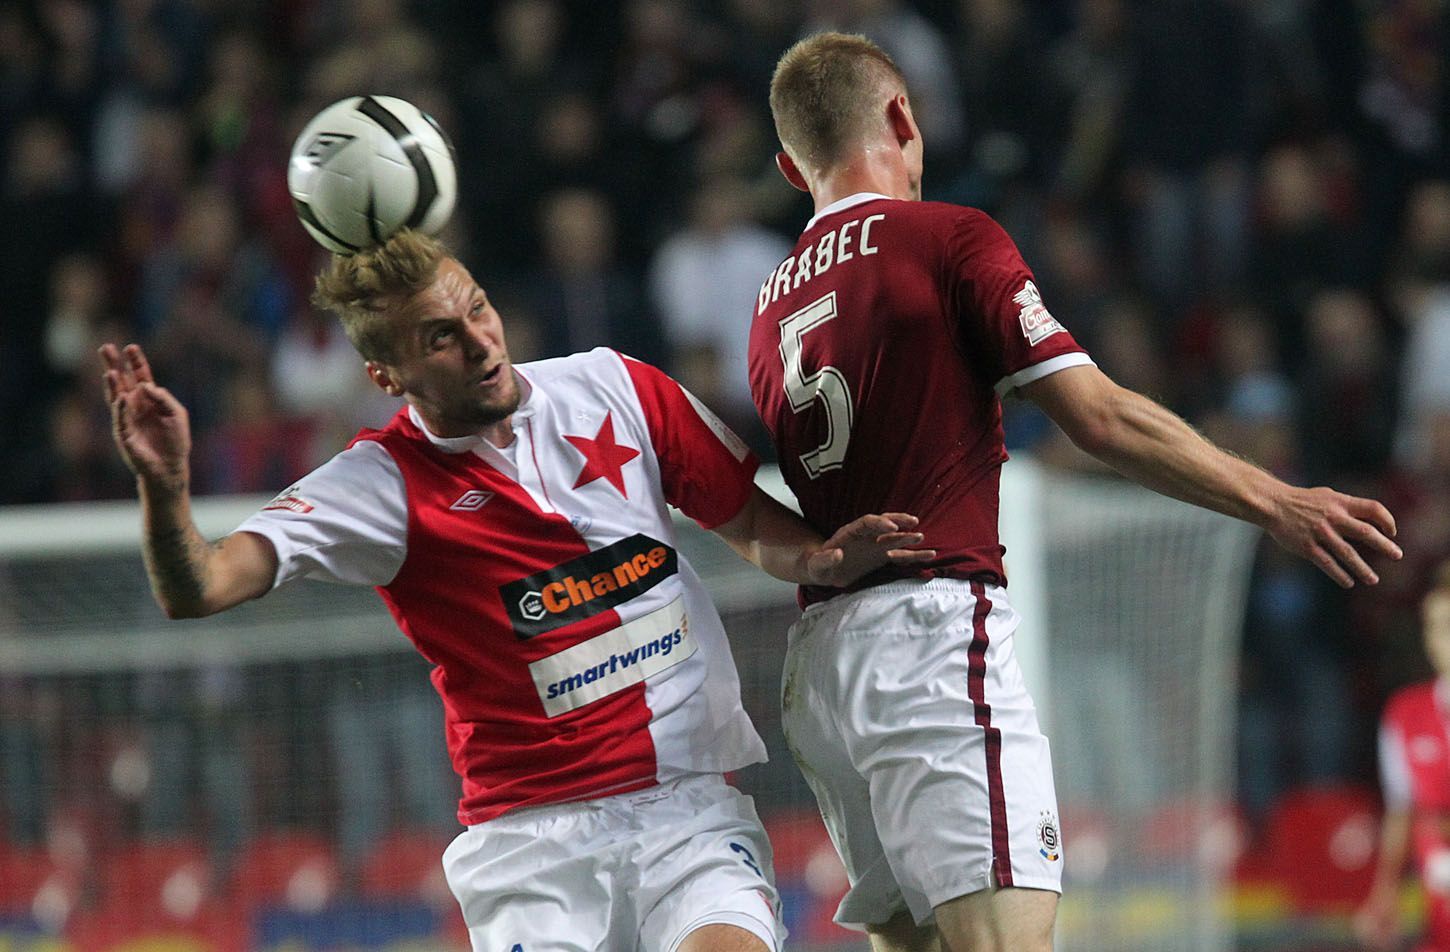 Derby Slavia - Sparta: Milan Bortel - Jakub Brabec